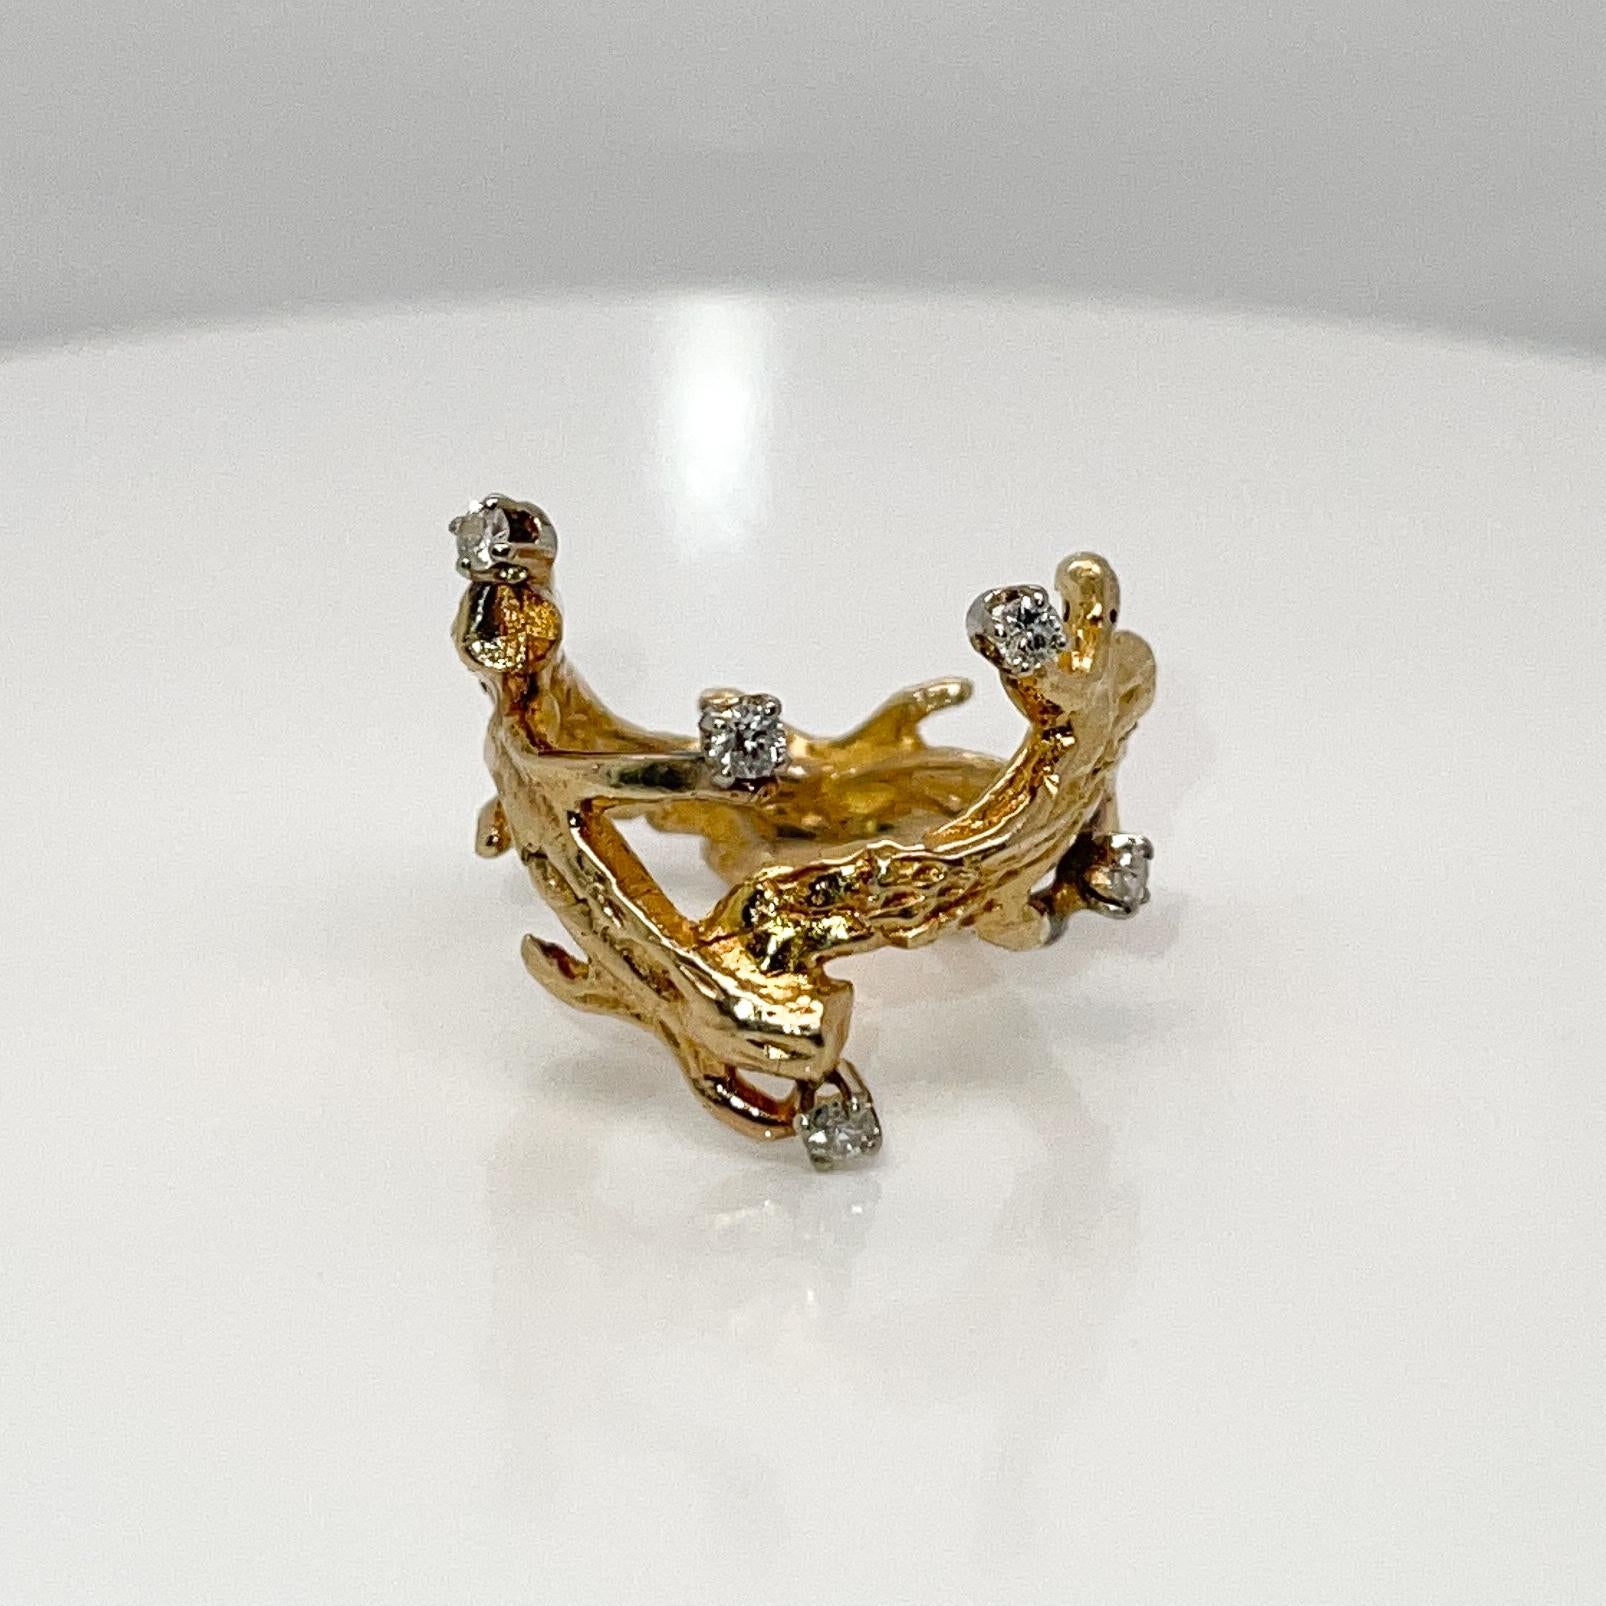 Modernist Studio Handcrafted 10 Karat Gold & Diamond Ring For Sale 4